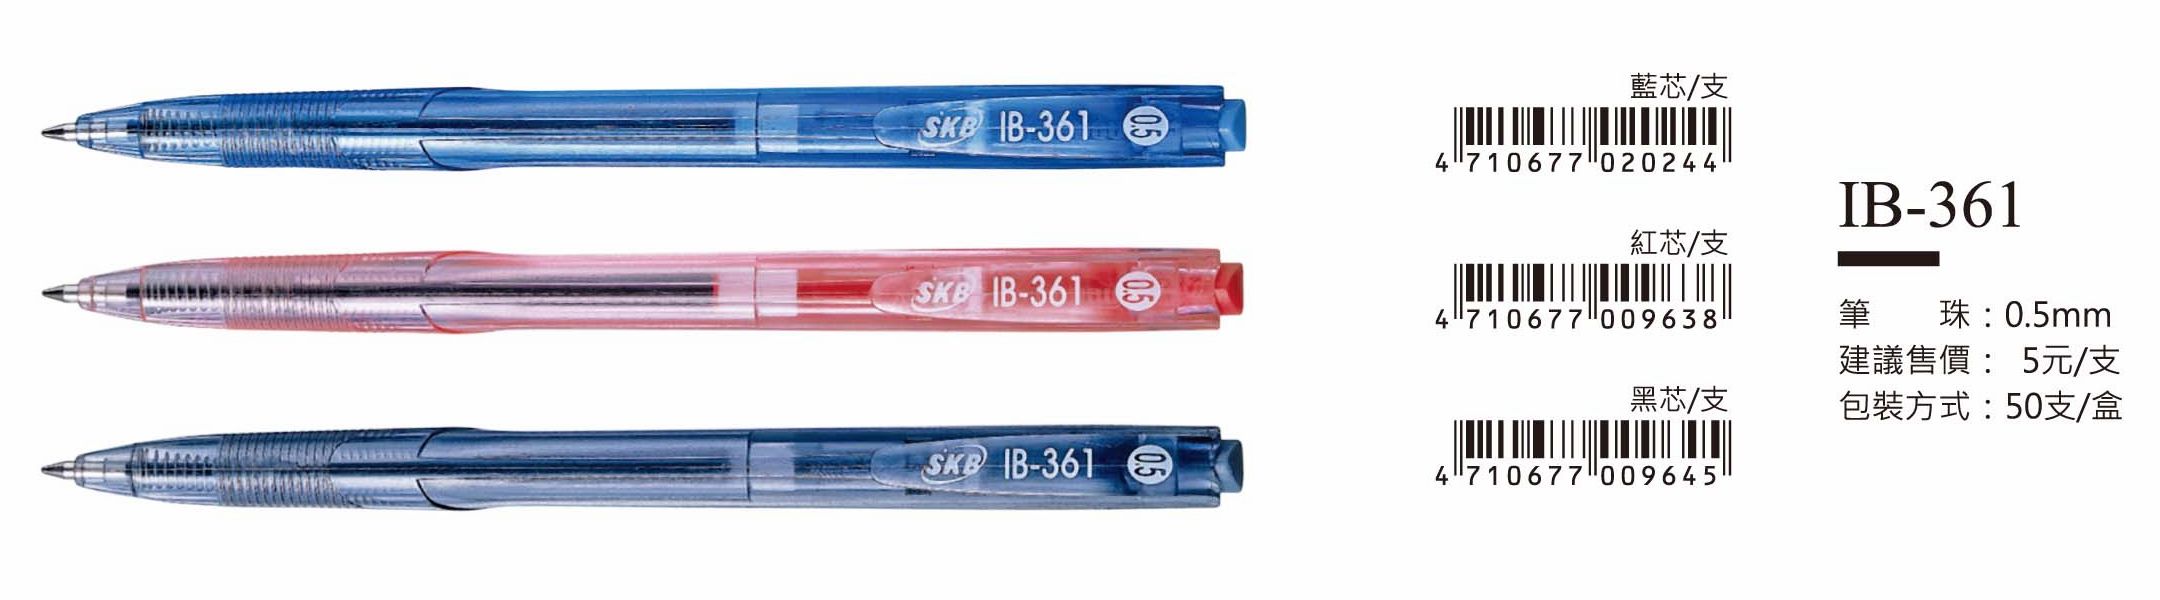 SKB自動原子筆-0.5mm-起訂量20盒